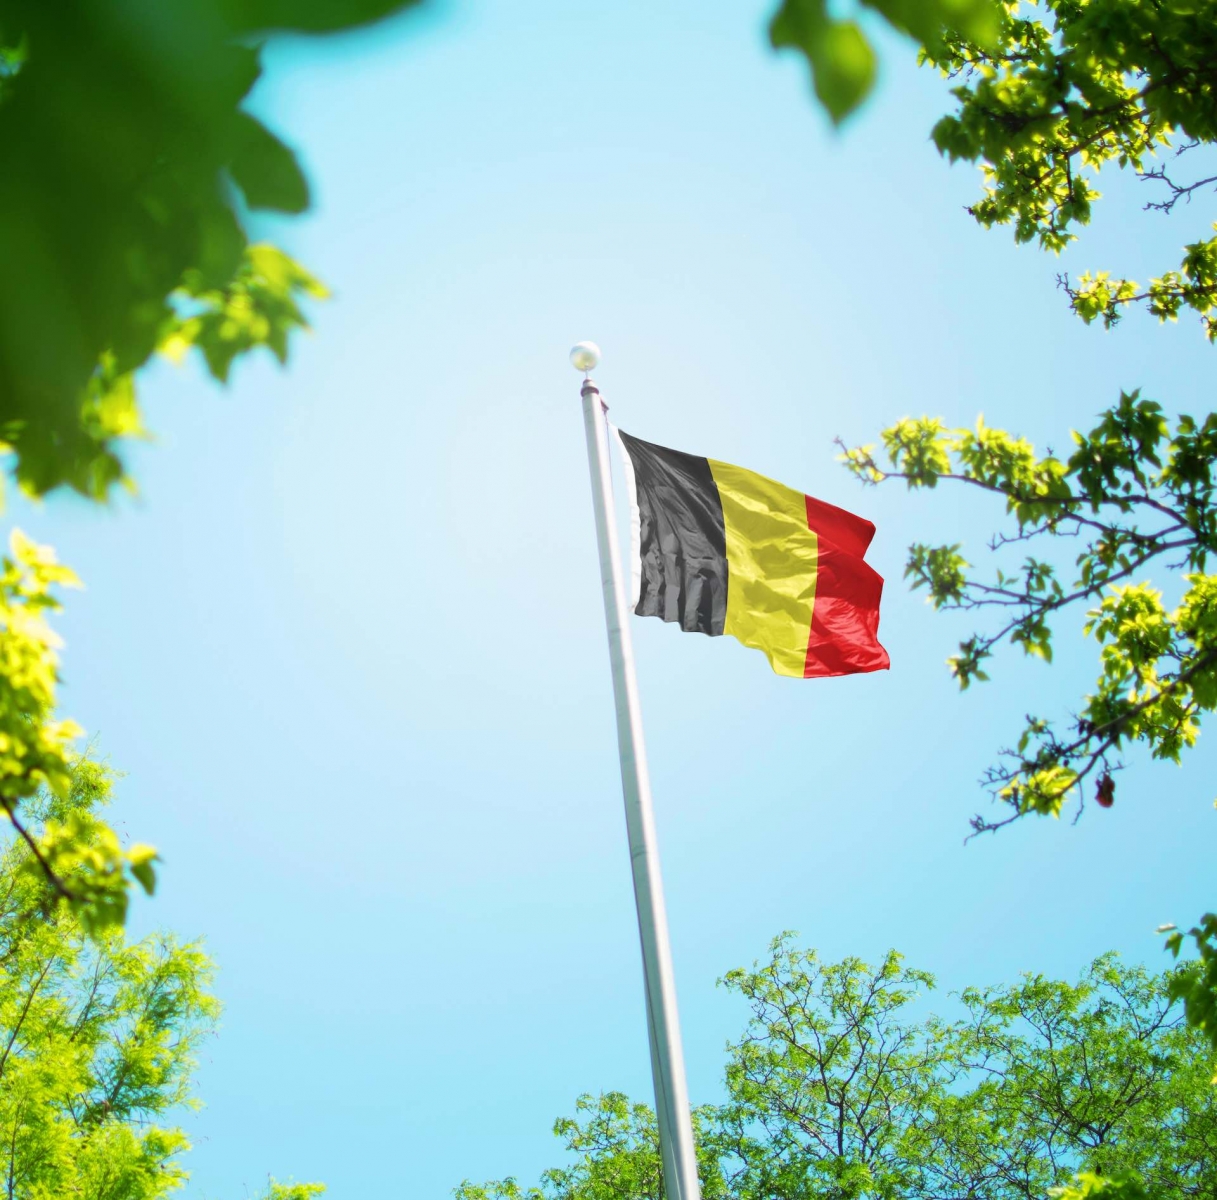 Belgium flag, Belgian flag waving in the wind between trees